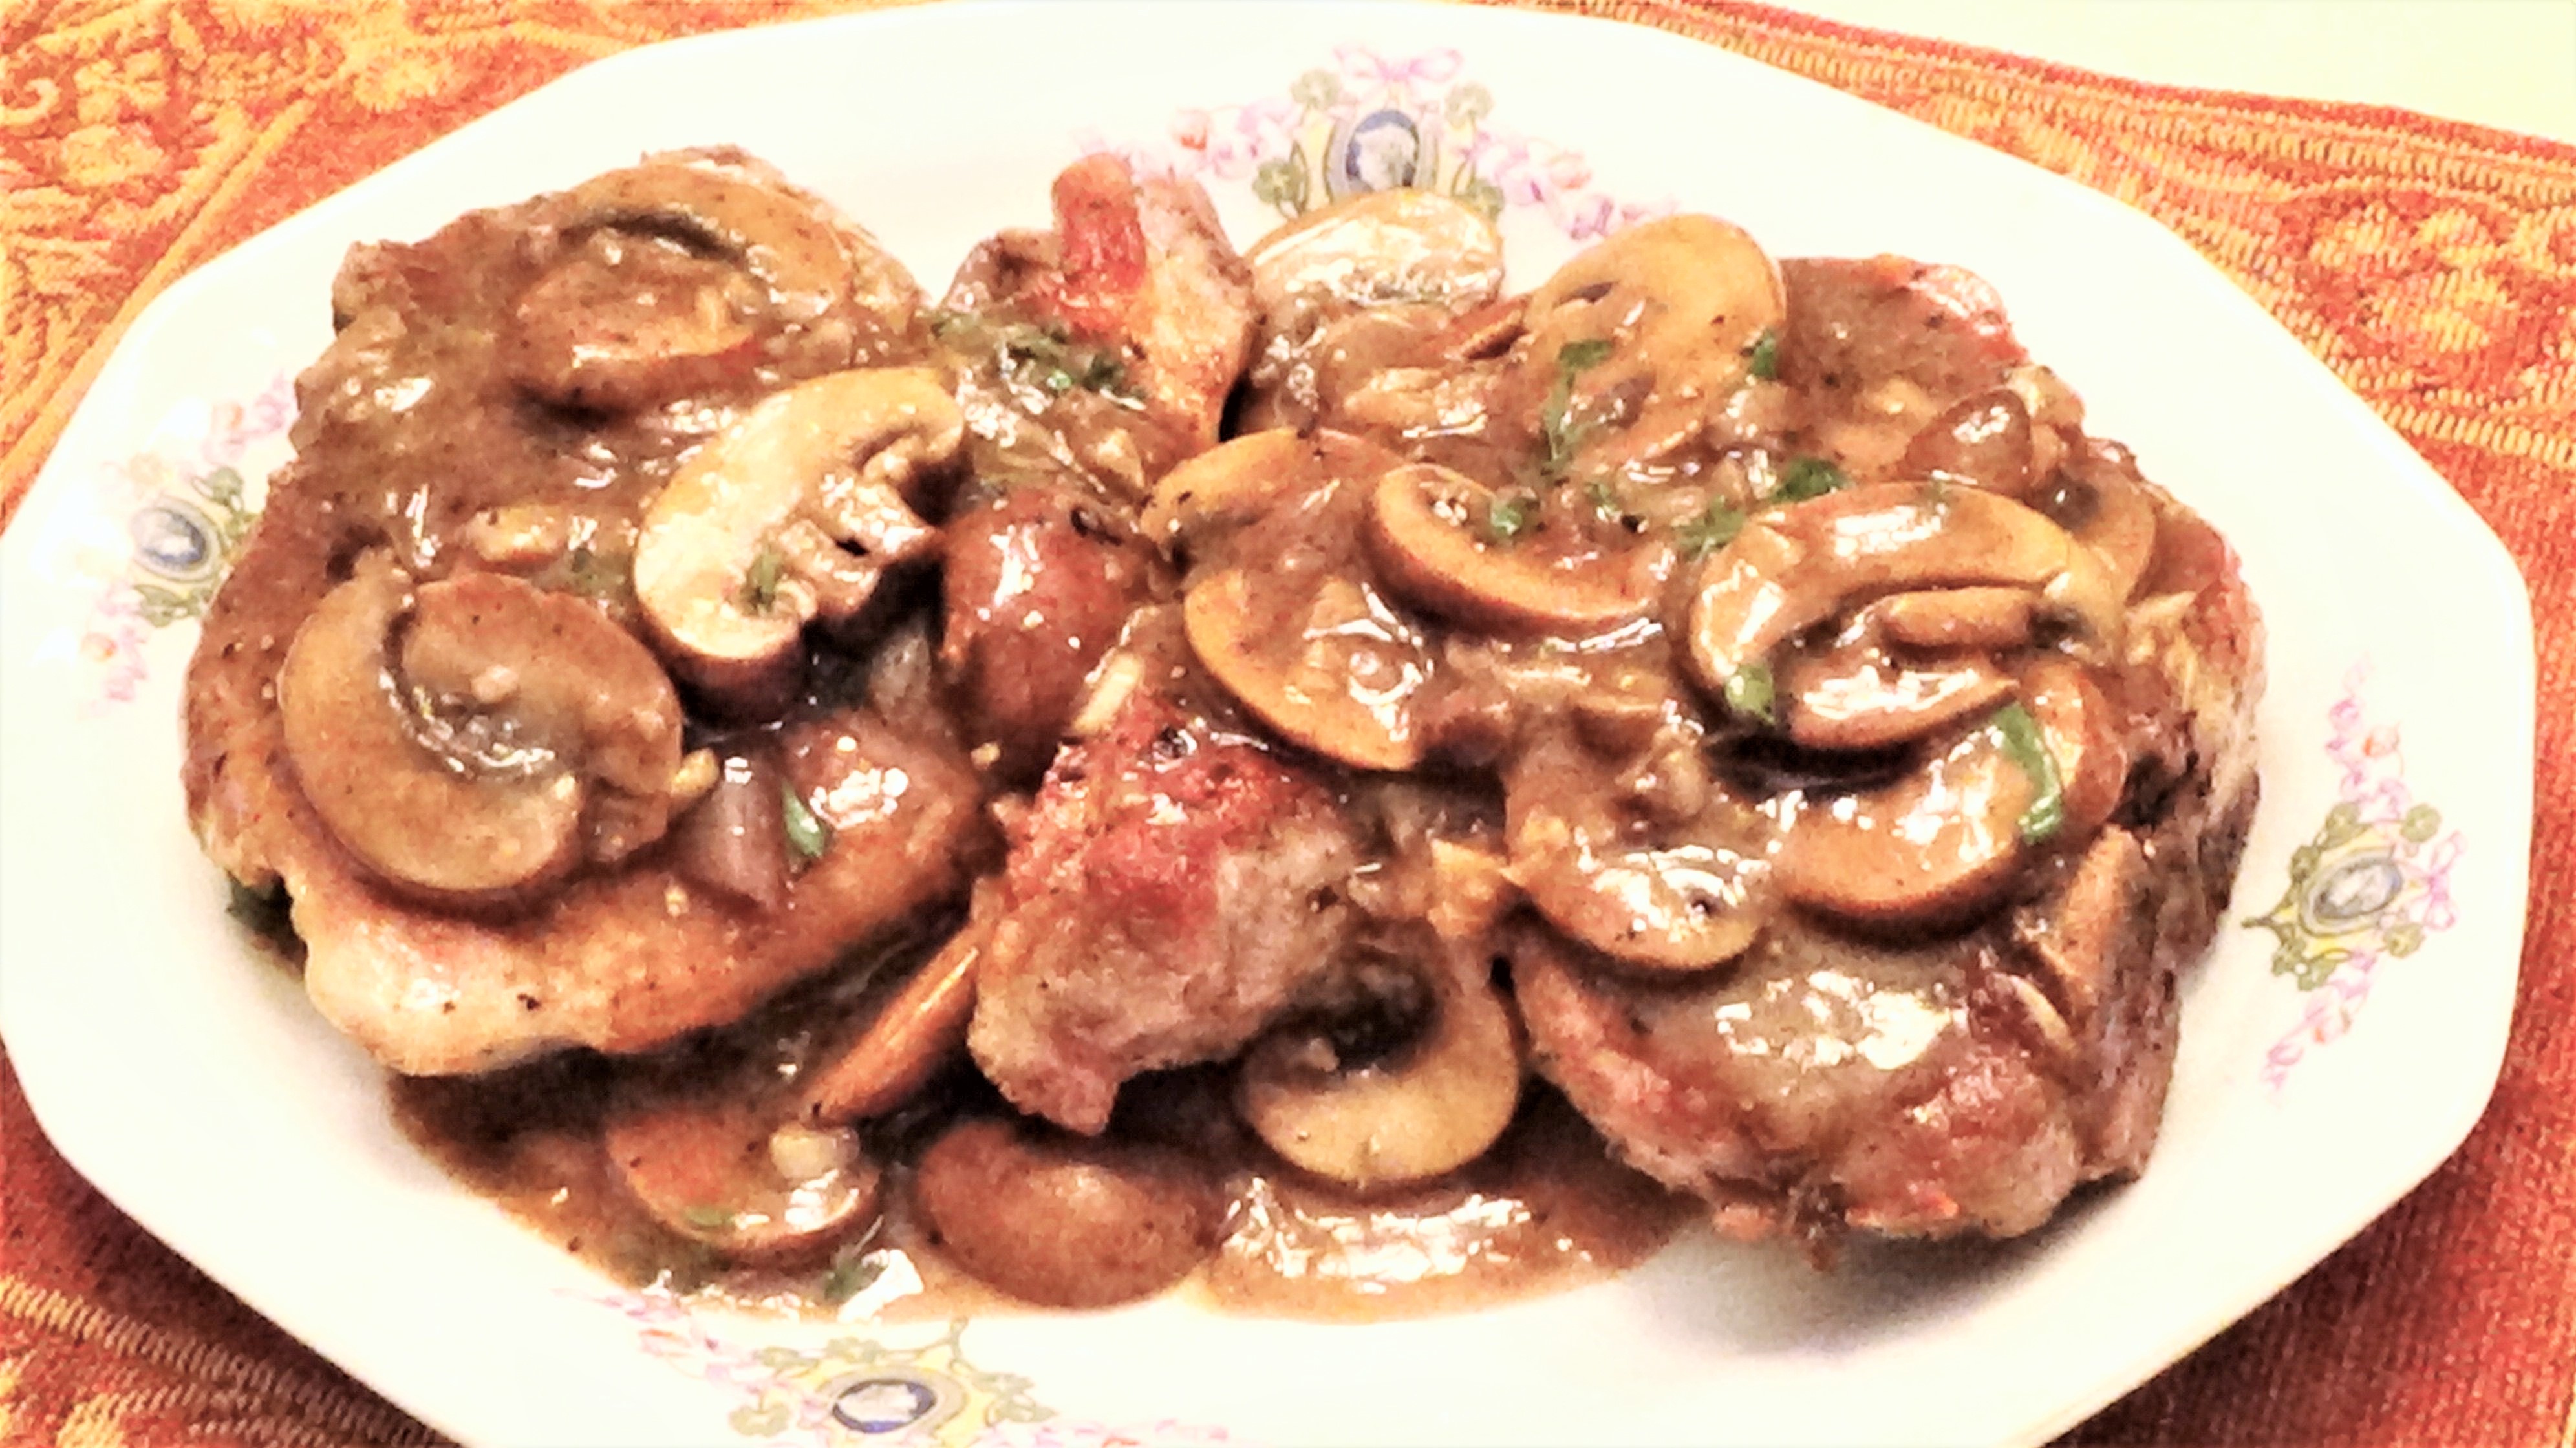 Seared Pork Chops with Mushroom, Brandy Pan Sauce